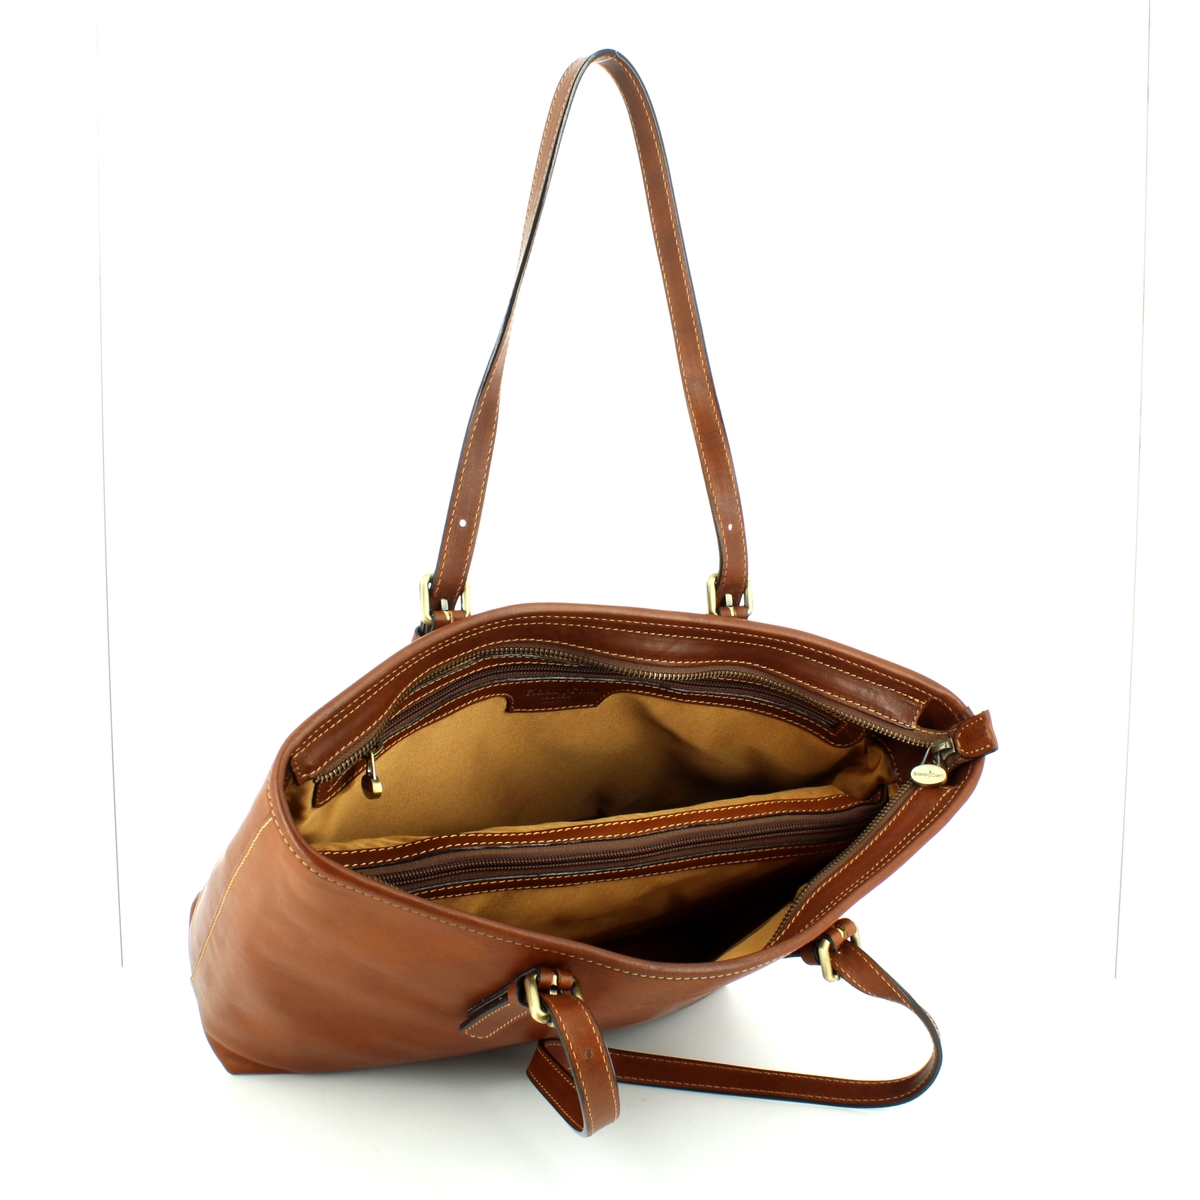 Gianni Conti Shoulder Back 913180-25 Tan handbag